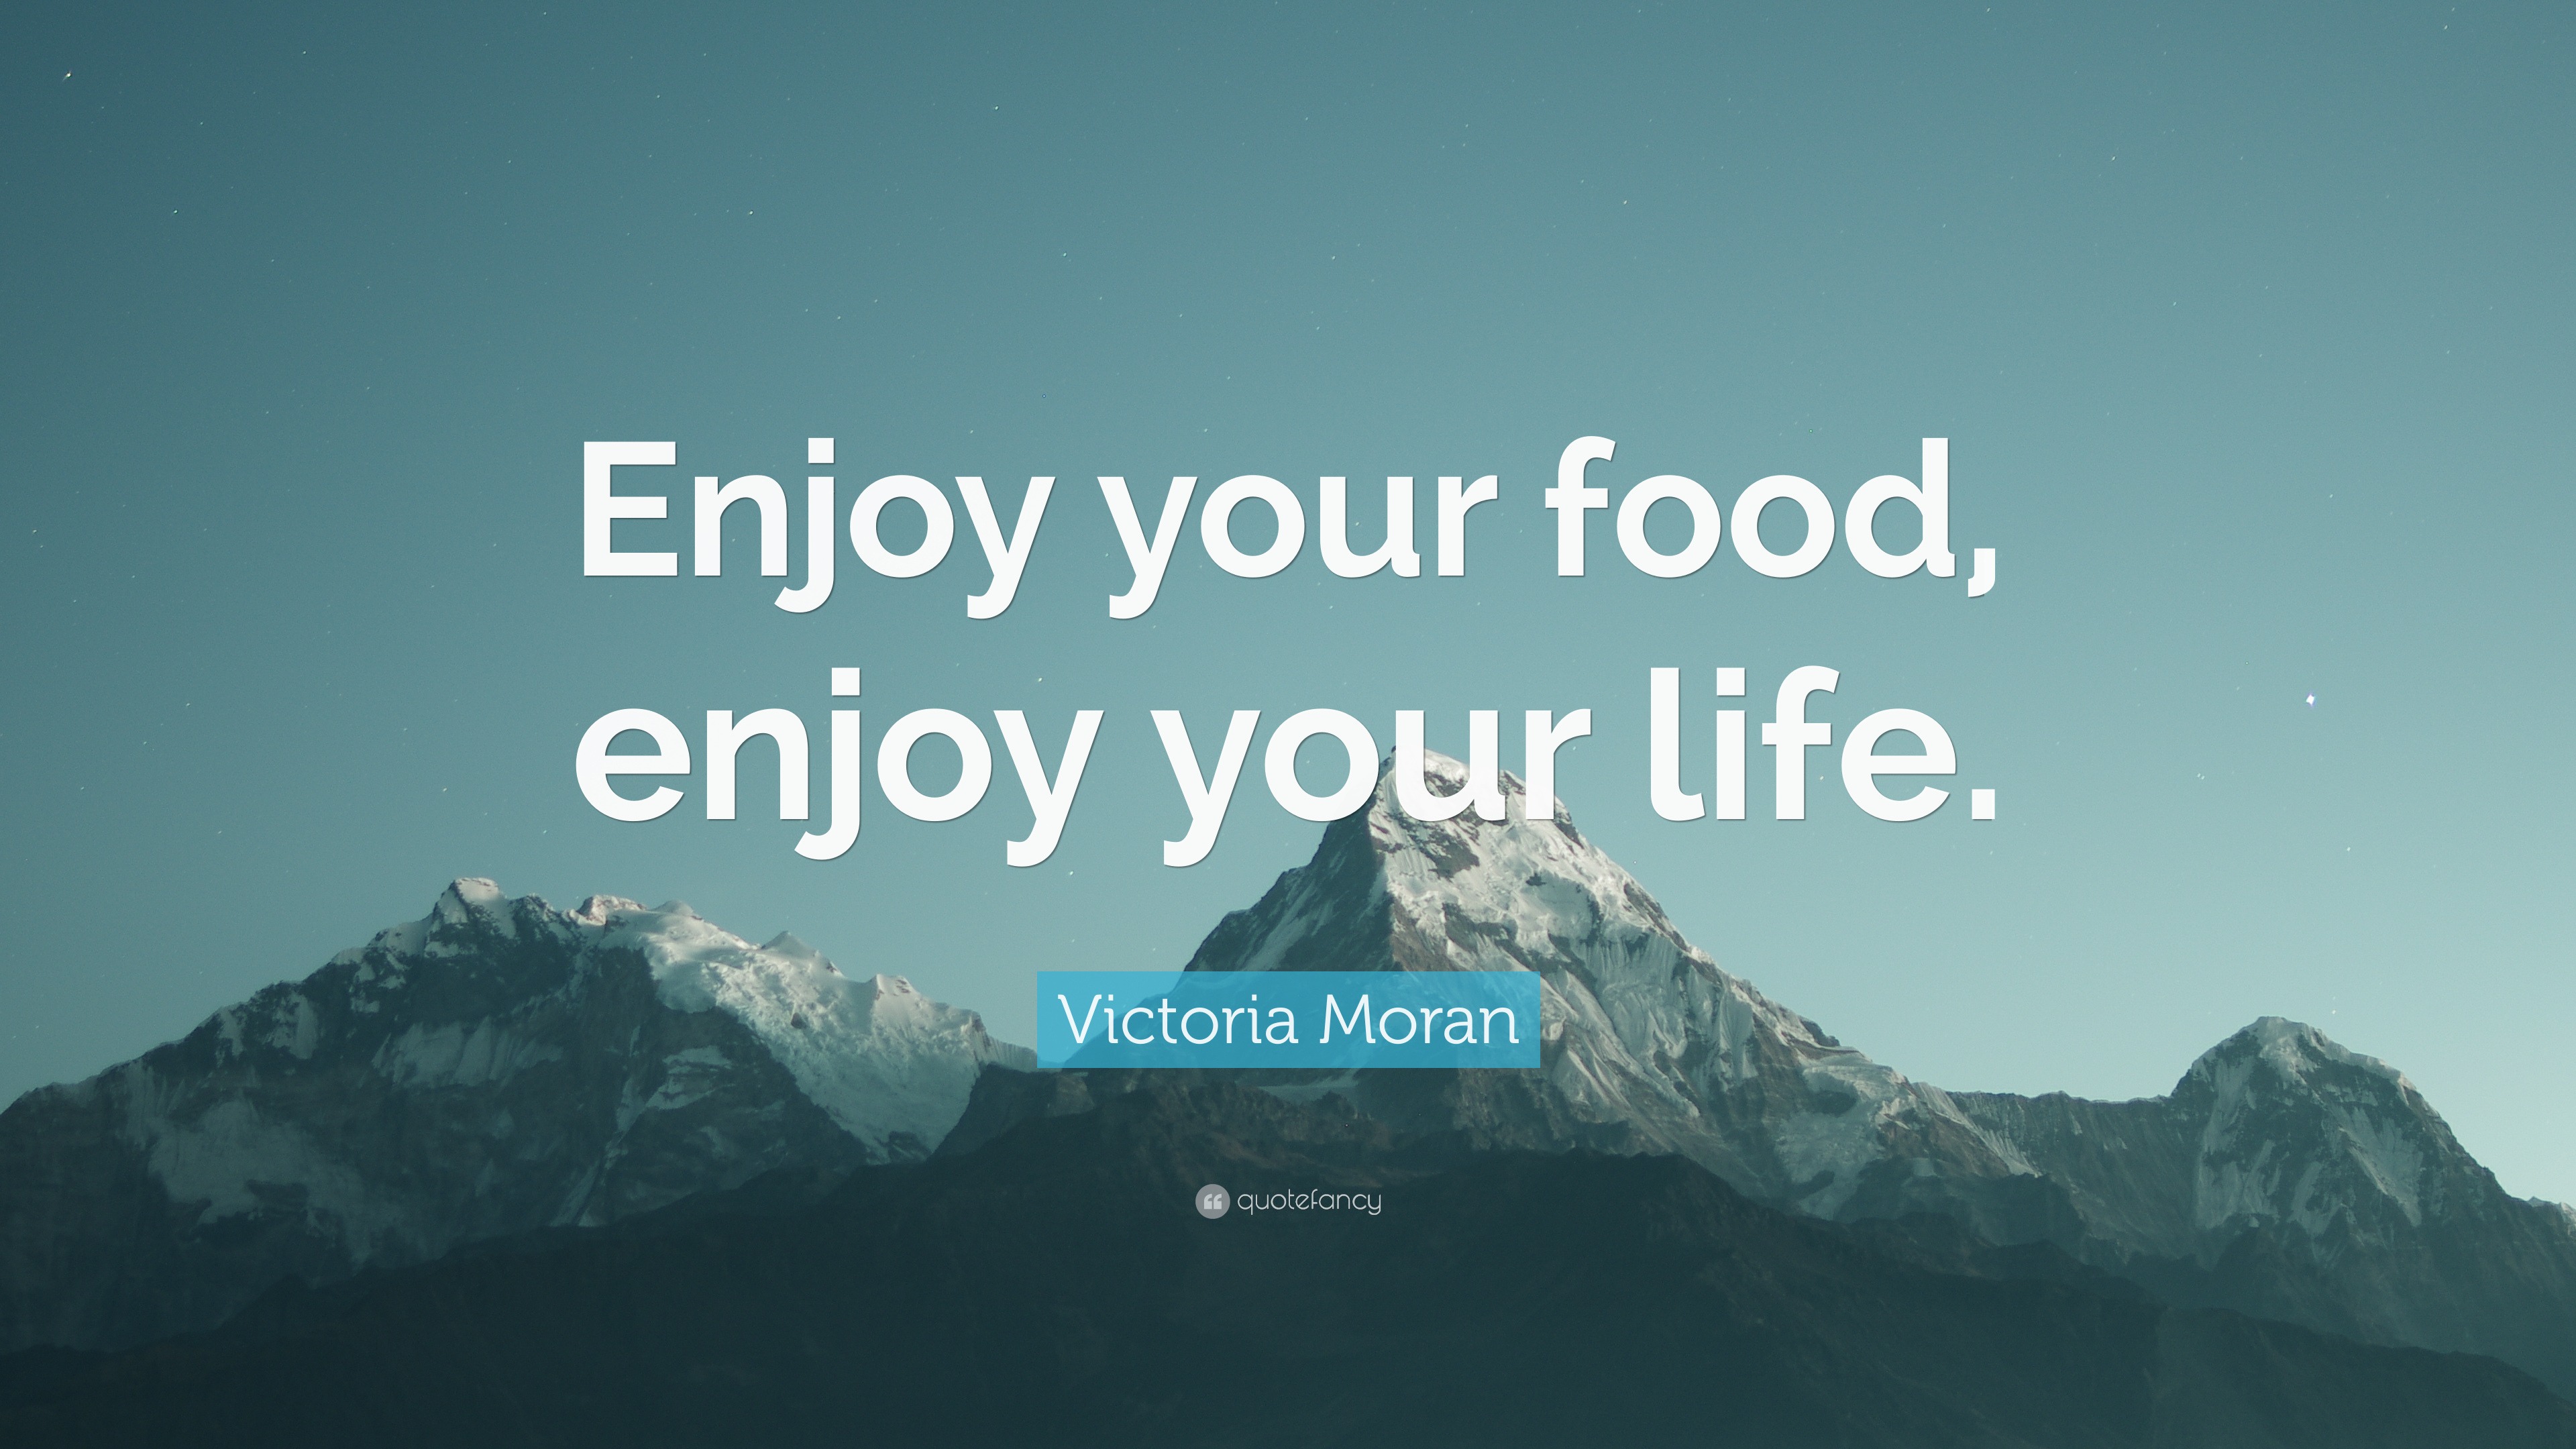 Victoria Moran Quote “Enjoy your food enjoy your life ”